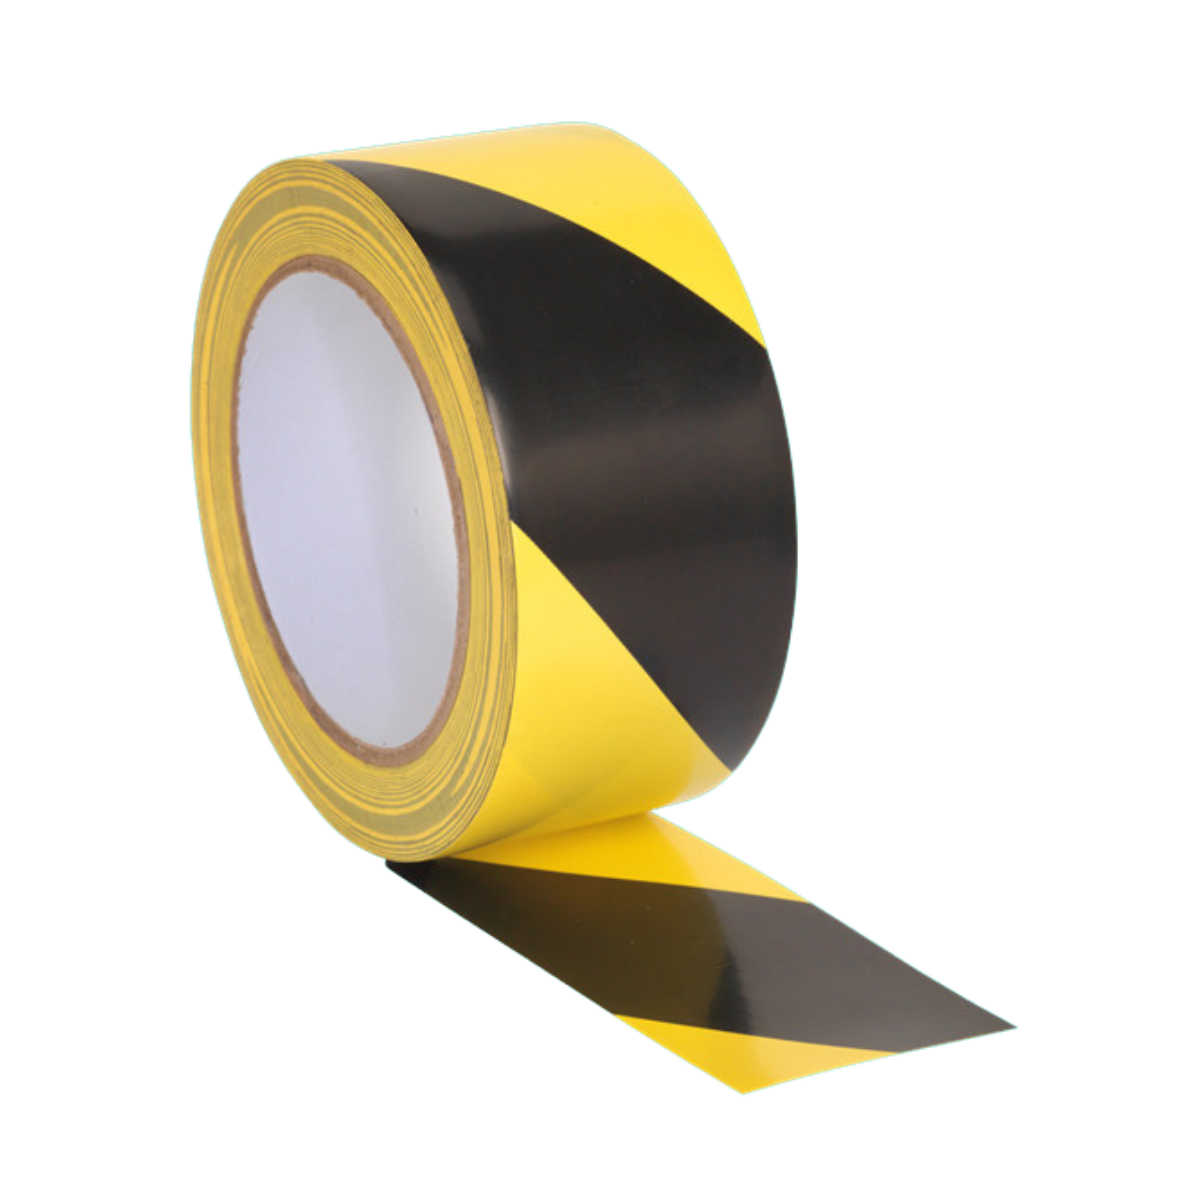 1 x Yuzet Hazard Warning Tape Self Adhesive Black/Yellow 50mm x 33m